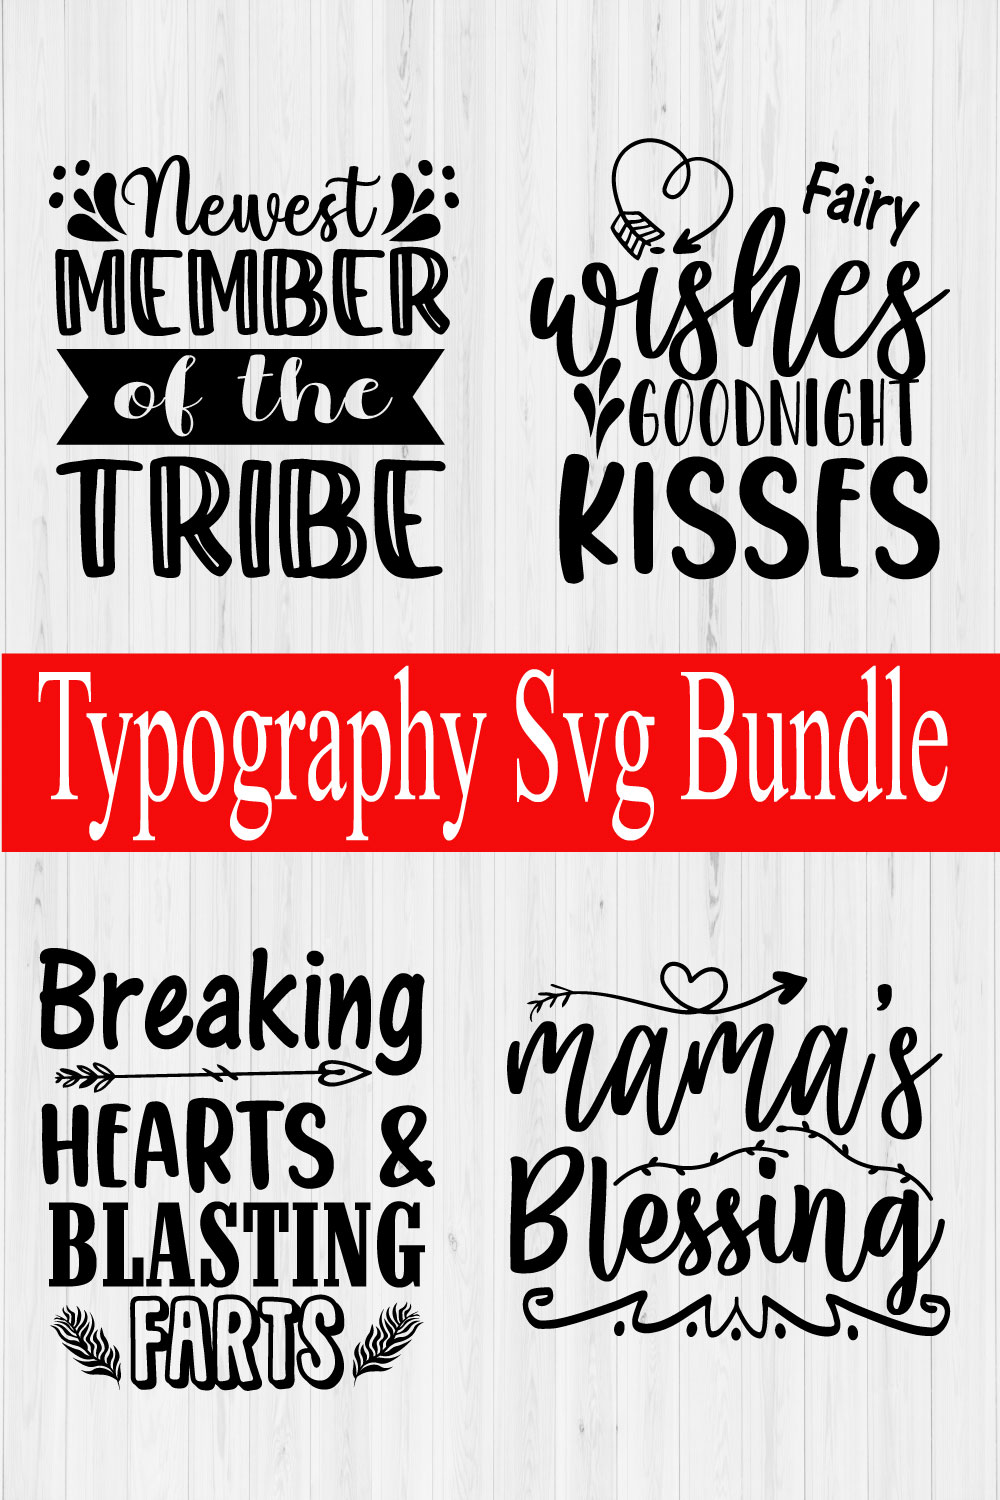 Typography Svg Design Bundle Vol2 pinterest preview image.